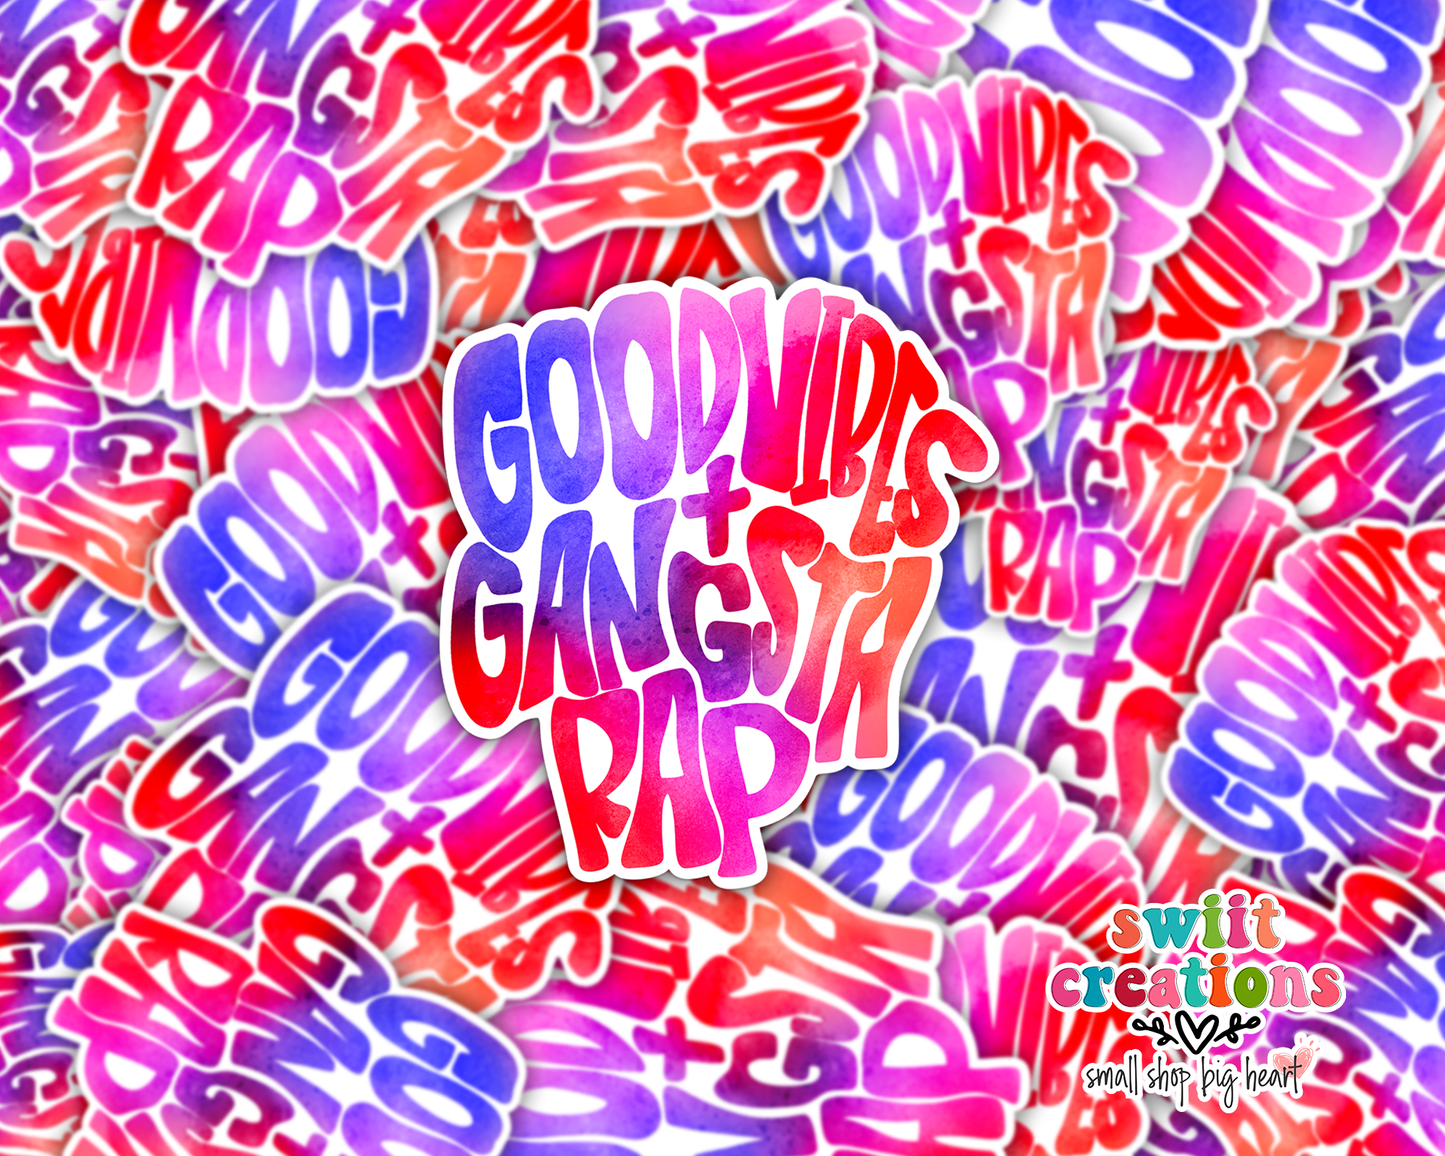 Good Vibes and Gangsta Rap Waterproof Sticker  (SS102) | SCD091